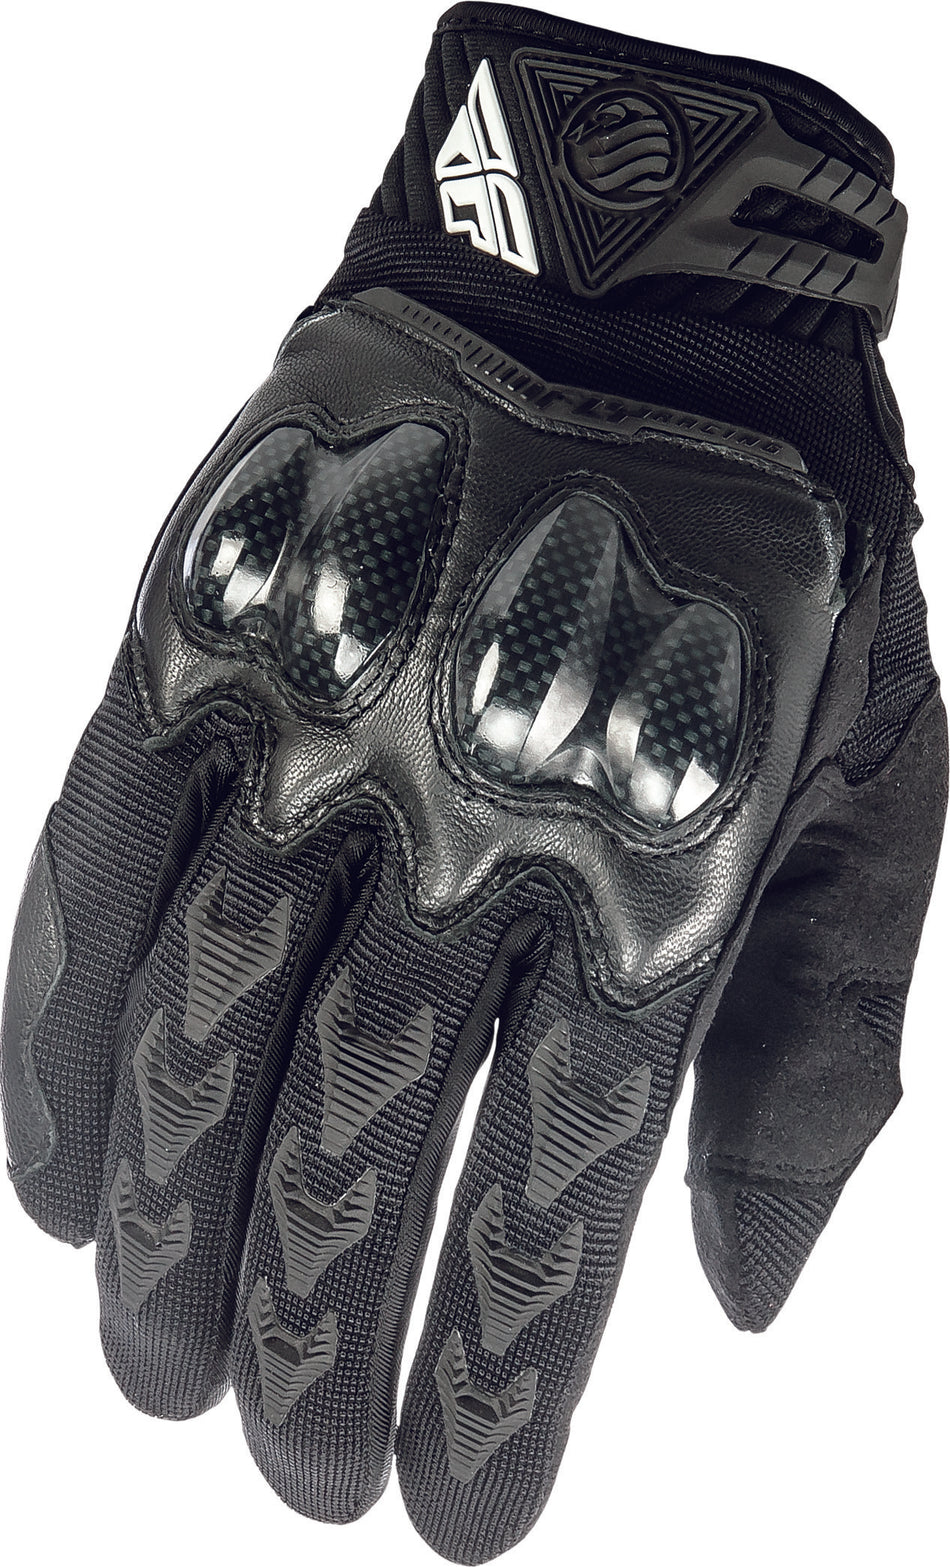 FLY RACING Patrol Xc Gloves Black Sz 8 369-06008